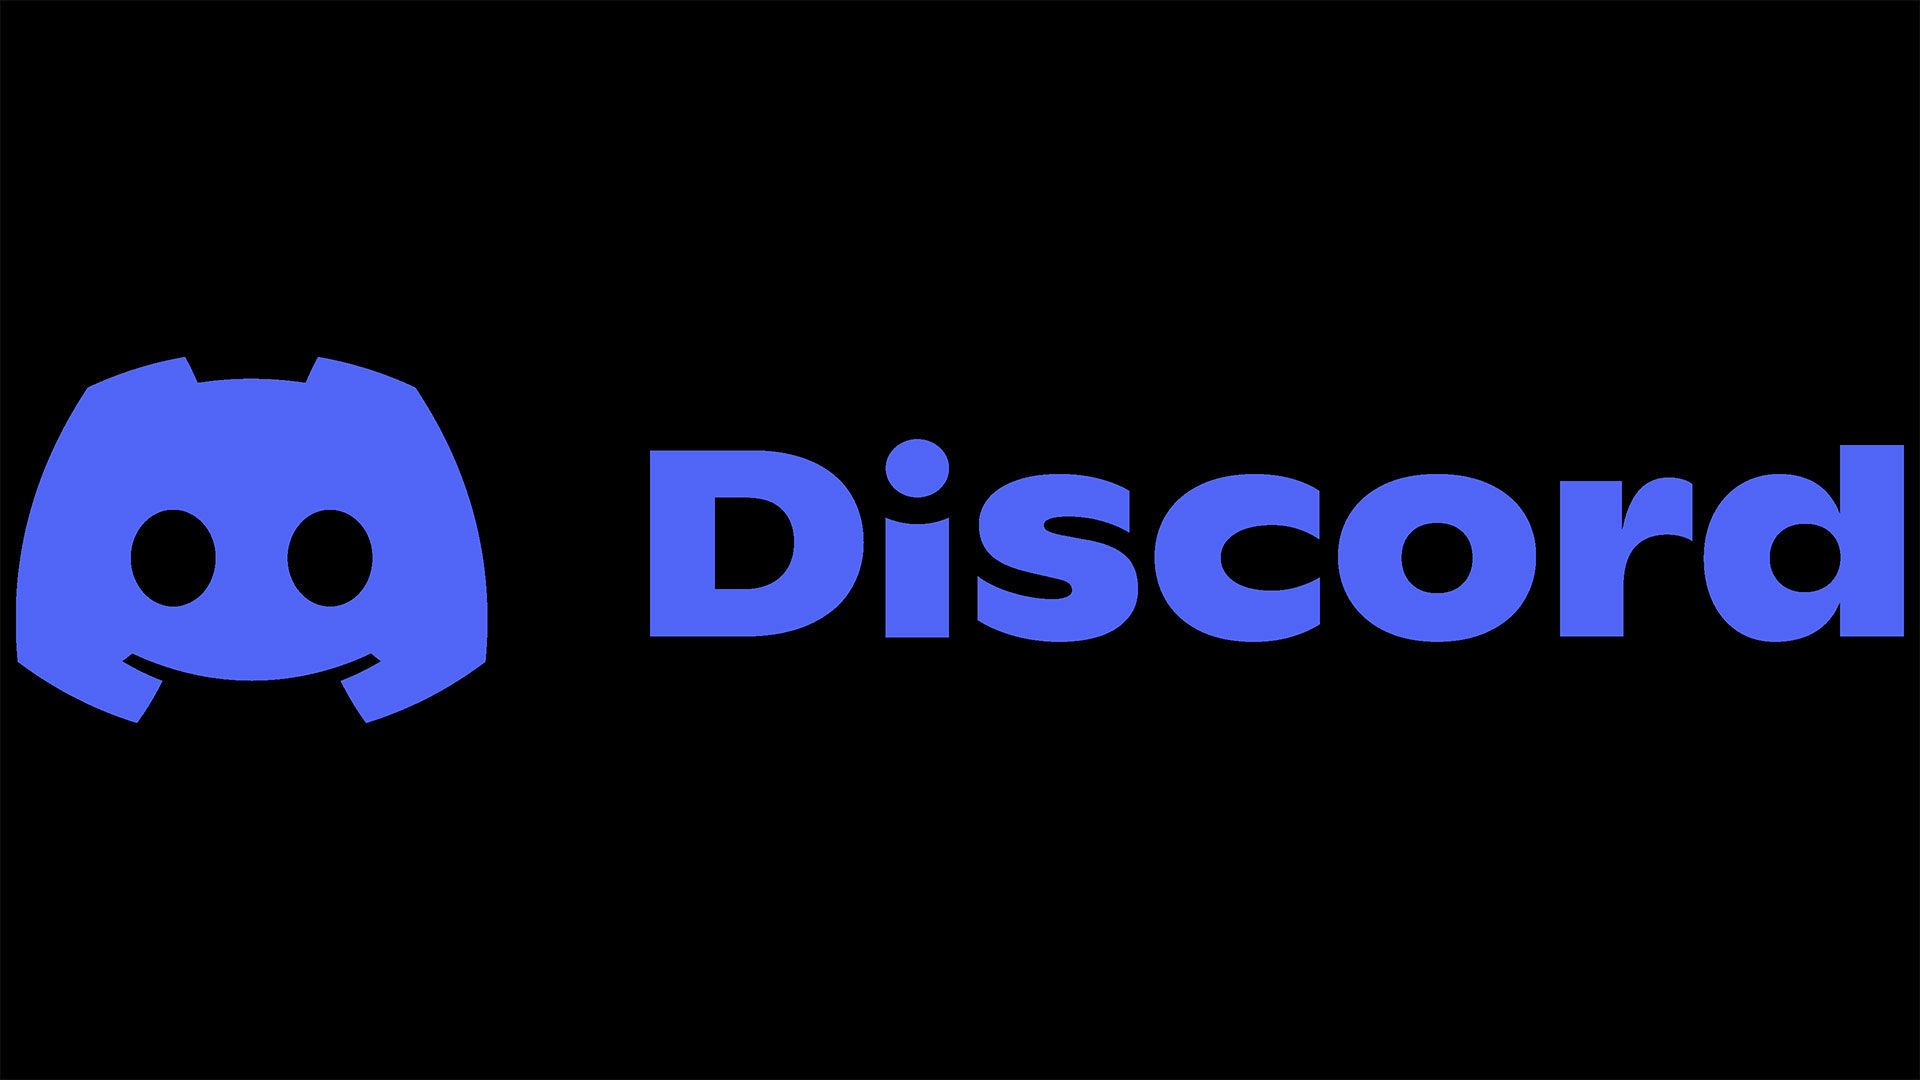 Discord name change update